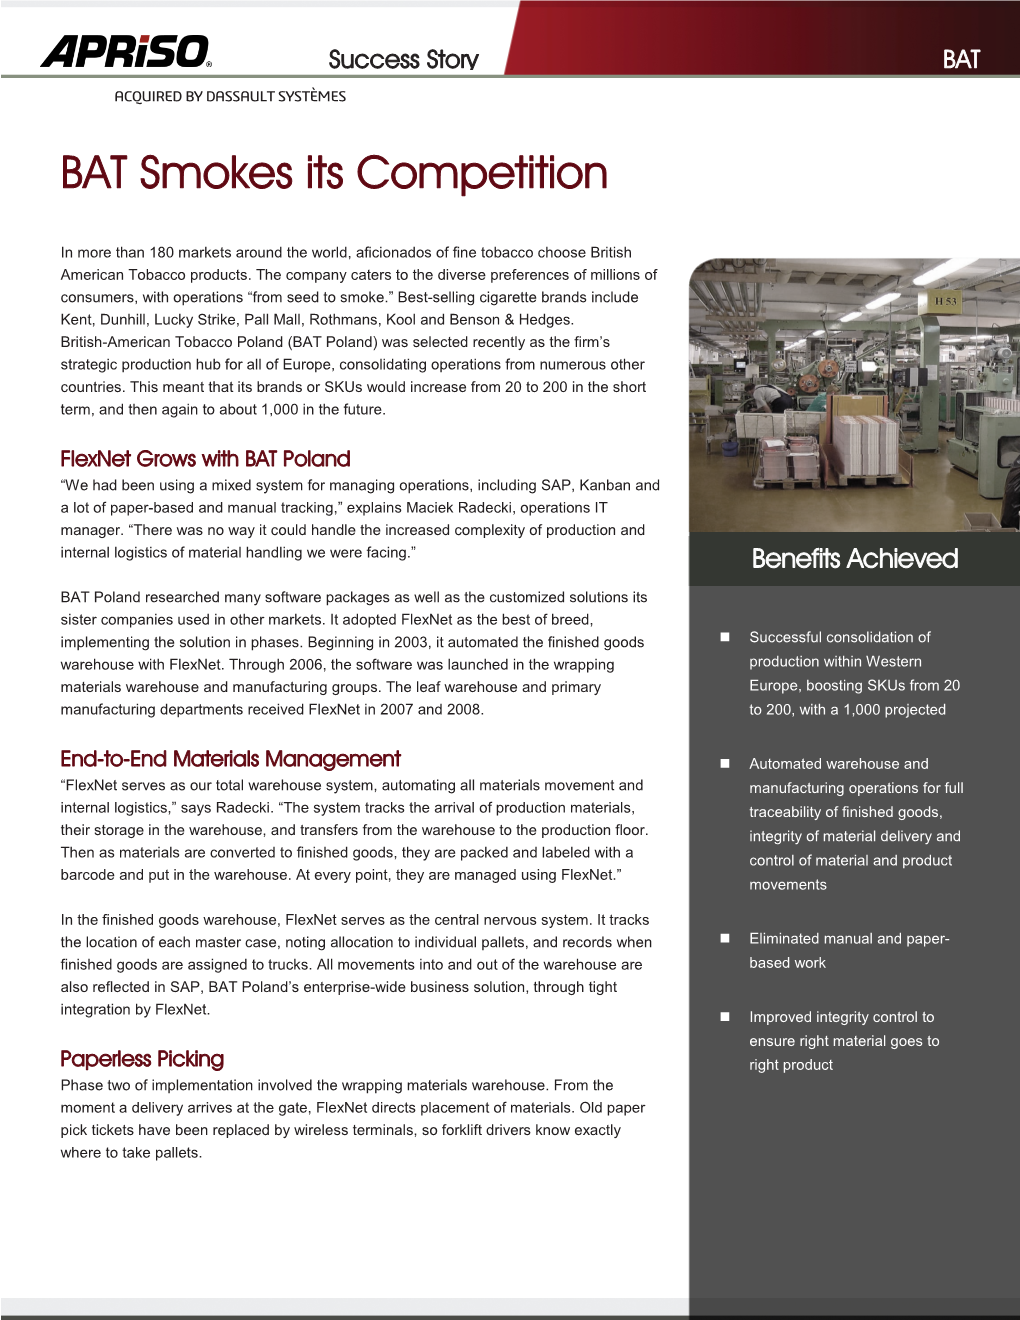 BAT Smokes Its Competition